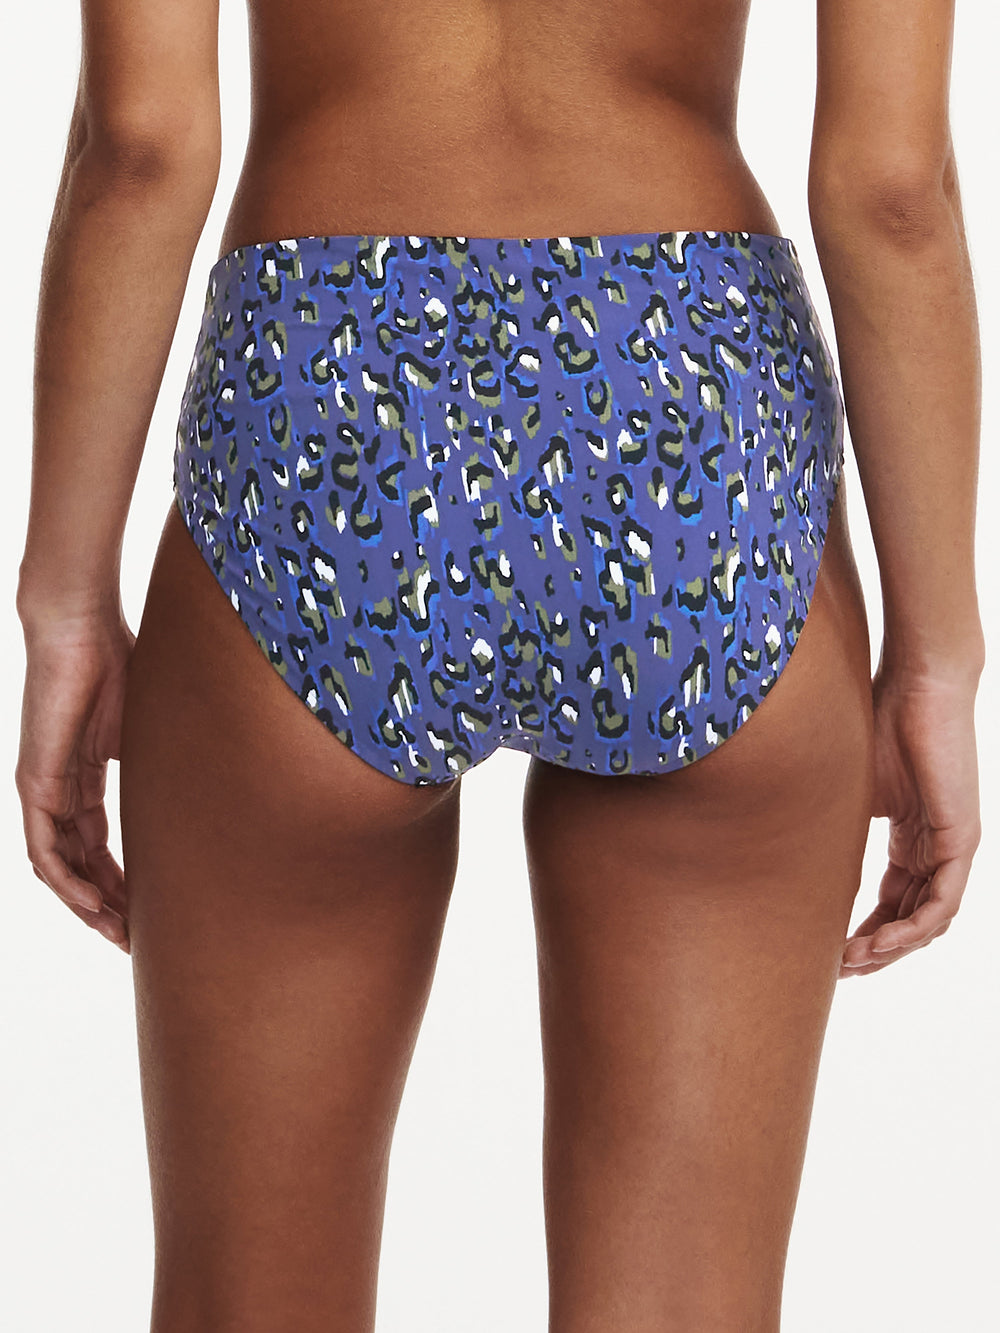 Chantelle Swimwear Eos Full Brief - 藍色豹紋全比基尼三角褲 Chantelle